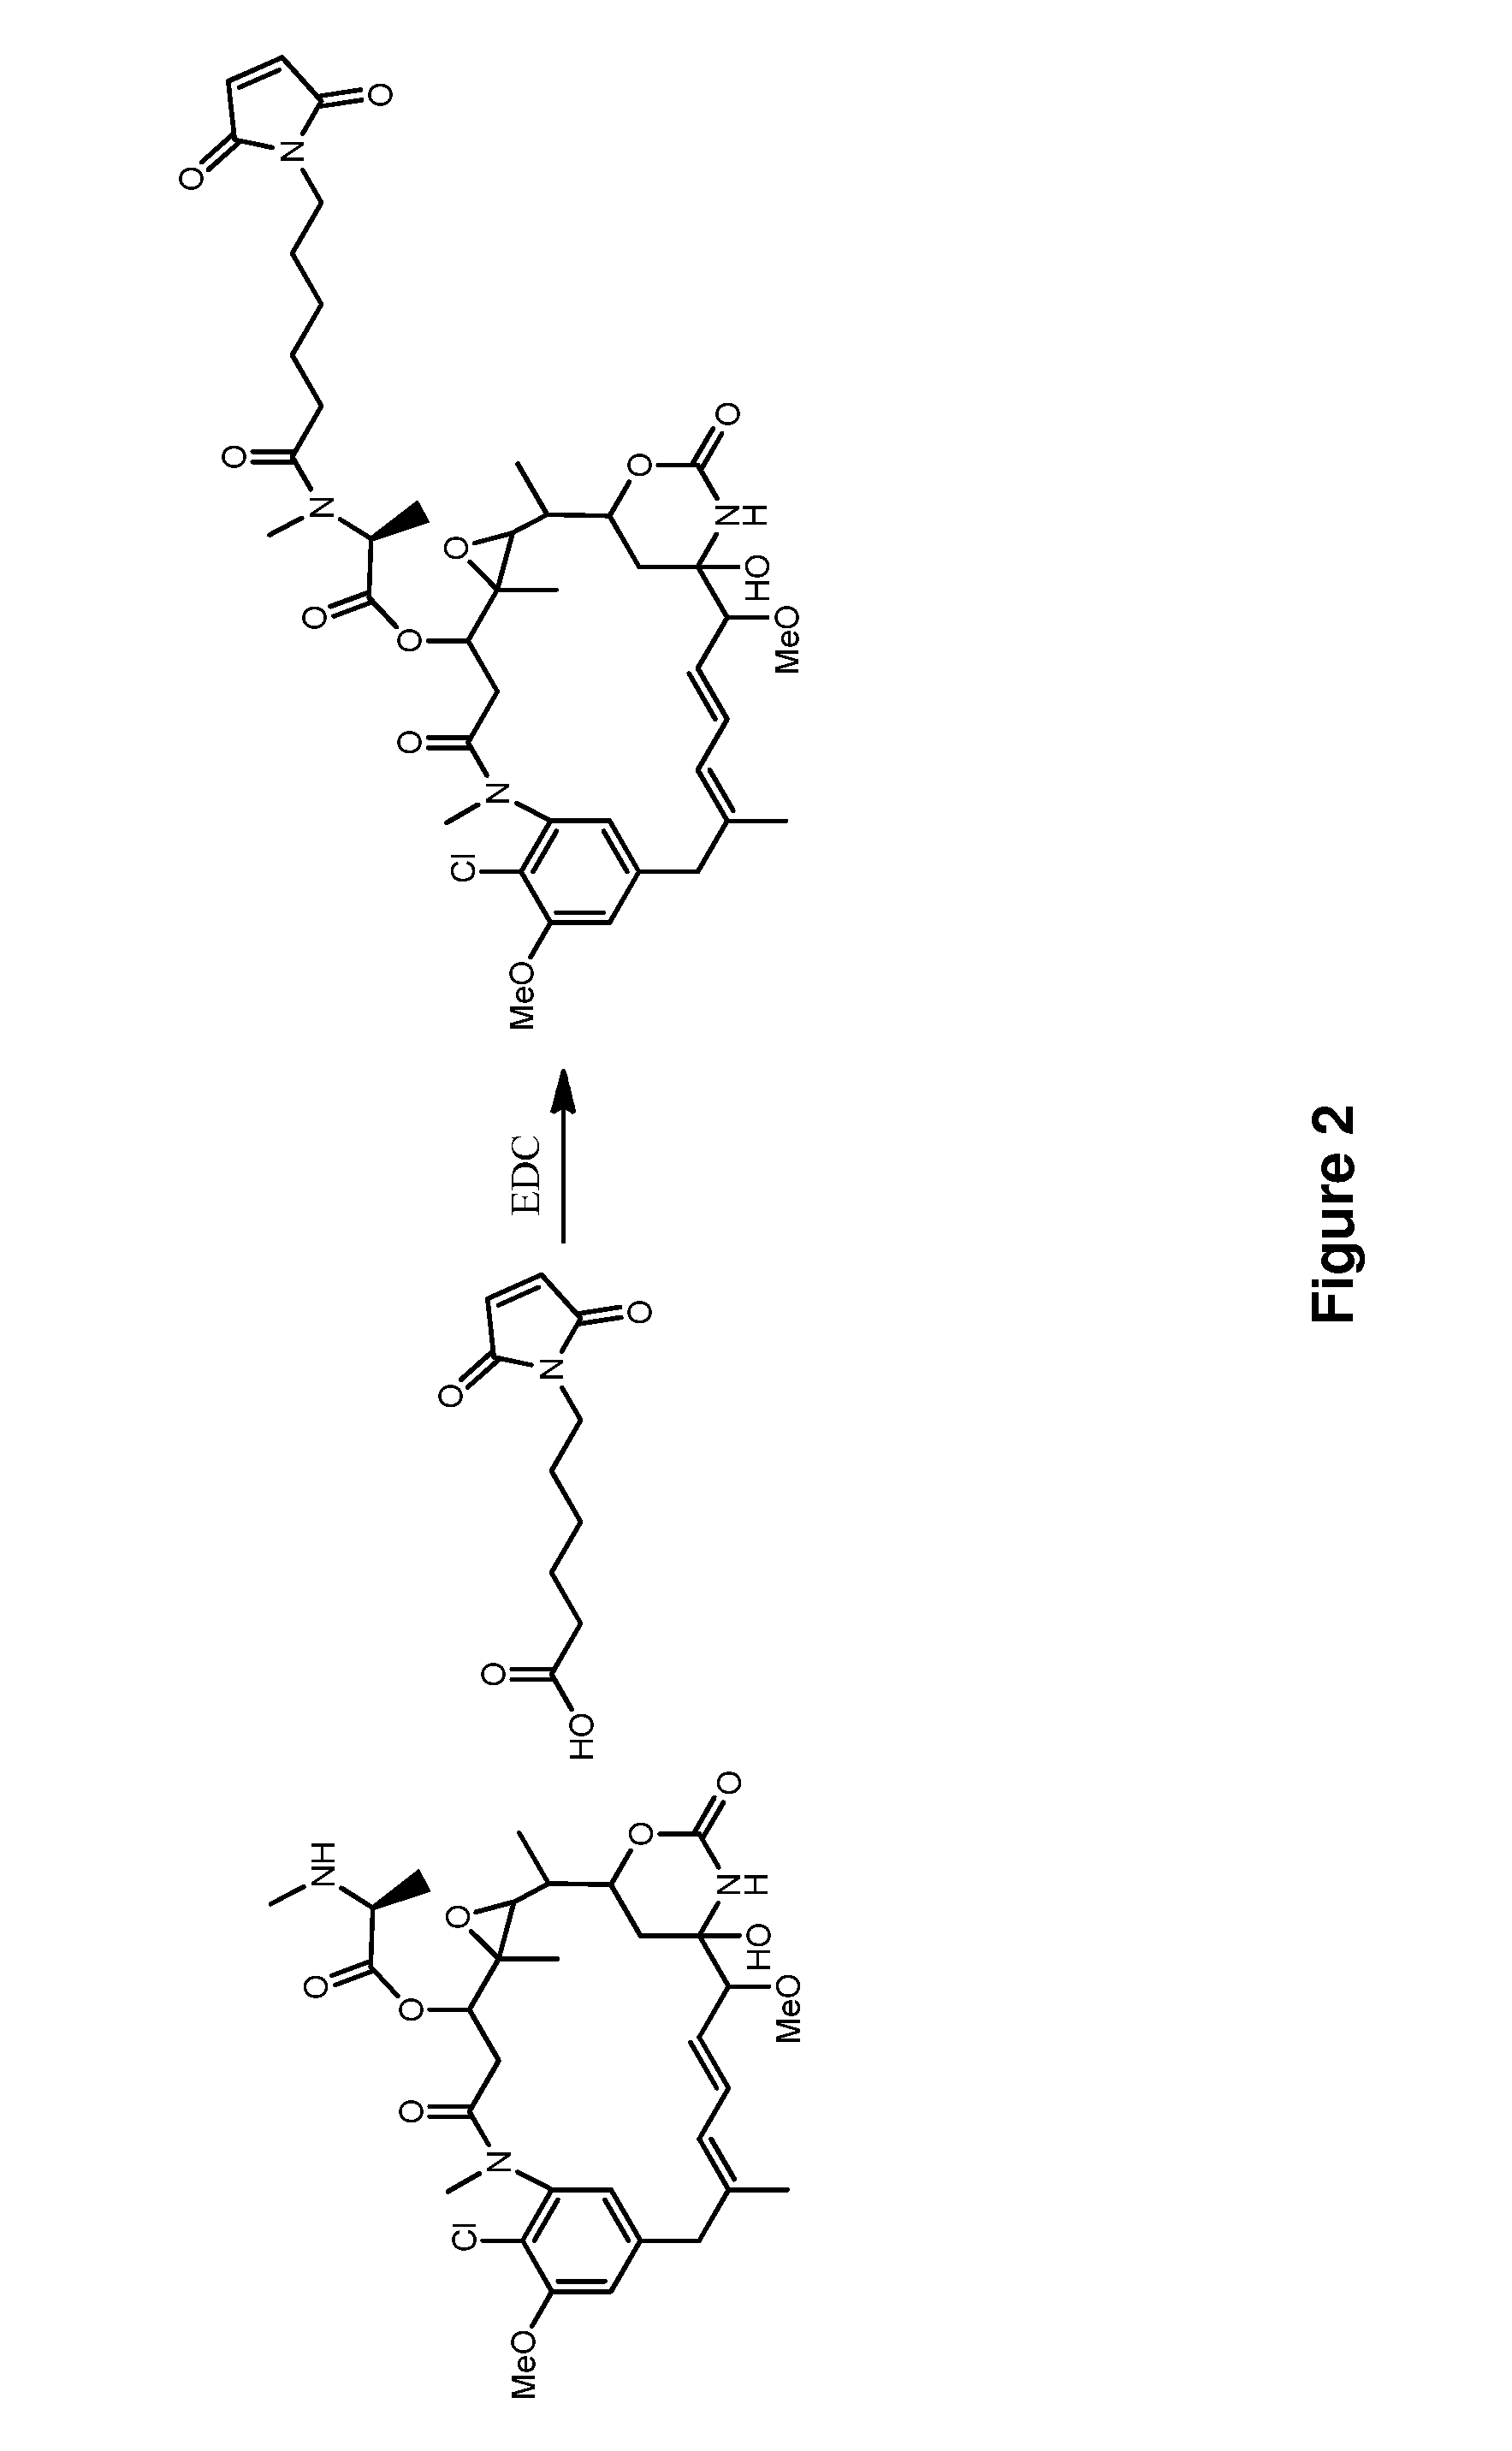 Methods for the acylation of maytansinol